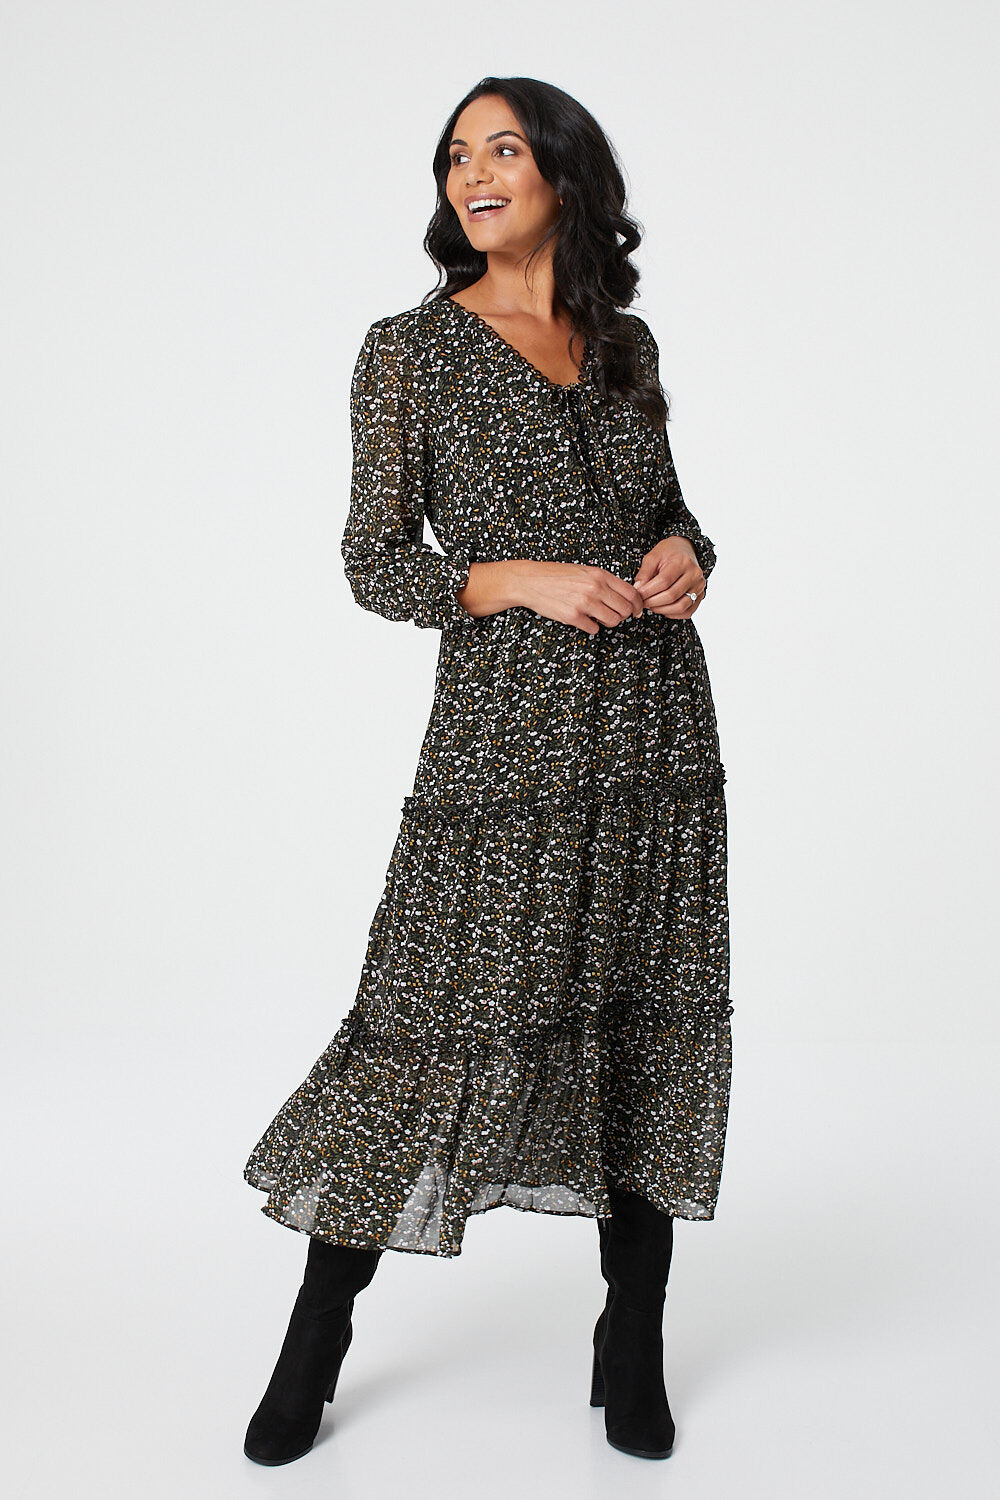 Izabel London Black - Floral Tie Front Tiered Midi Dress, Size: 12